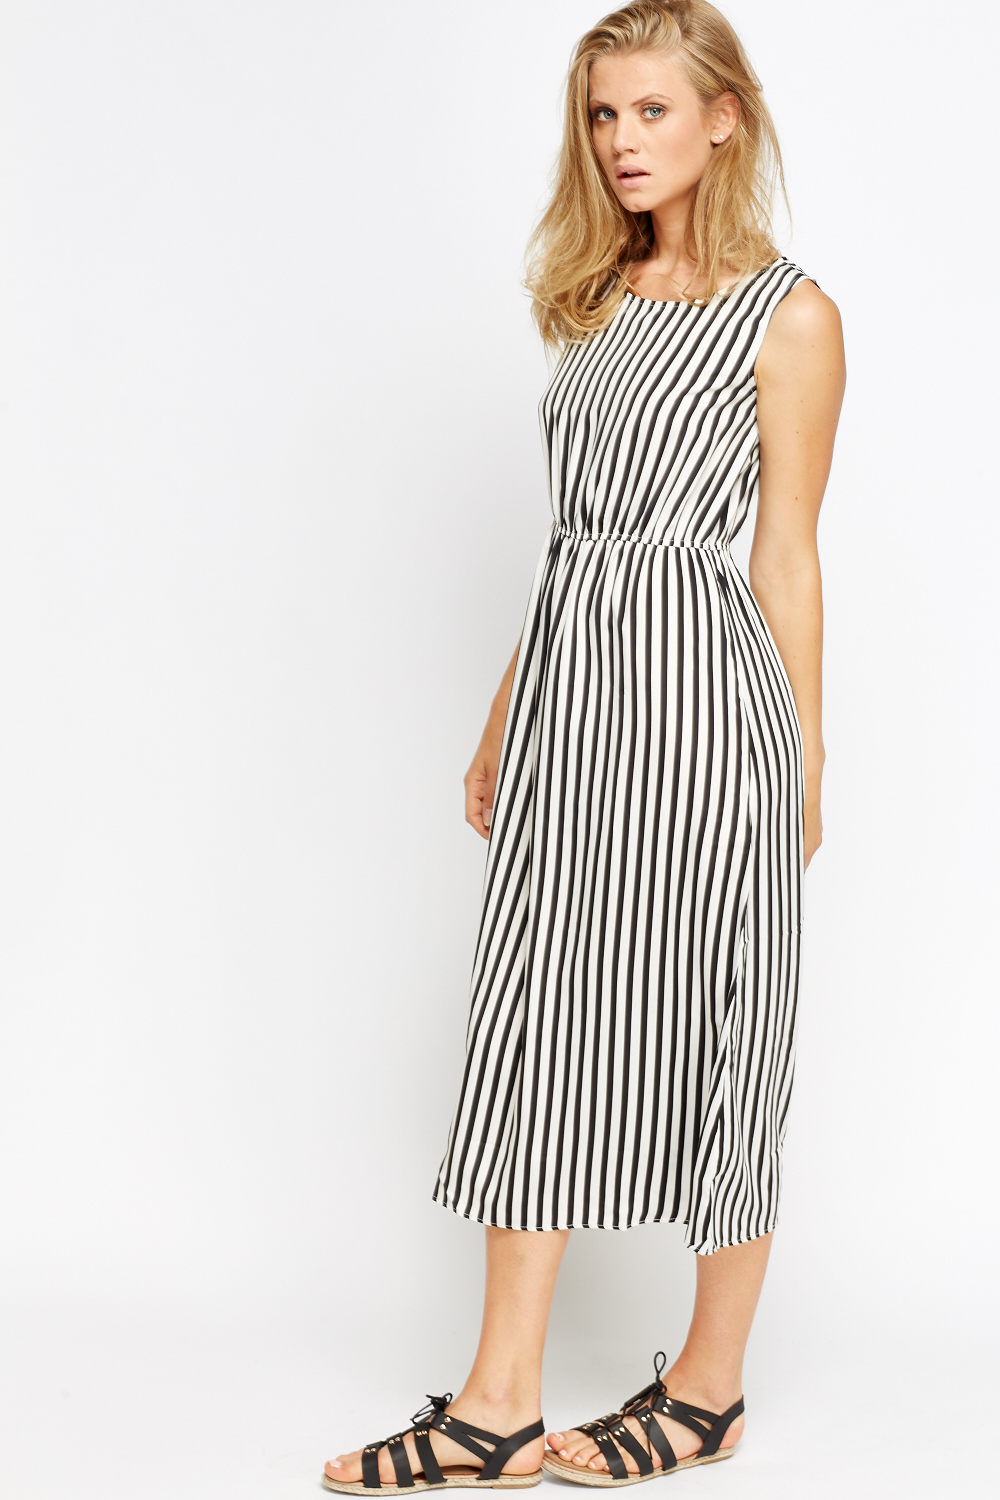 Mono Striped Midi Dress - Just $7